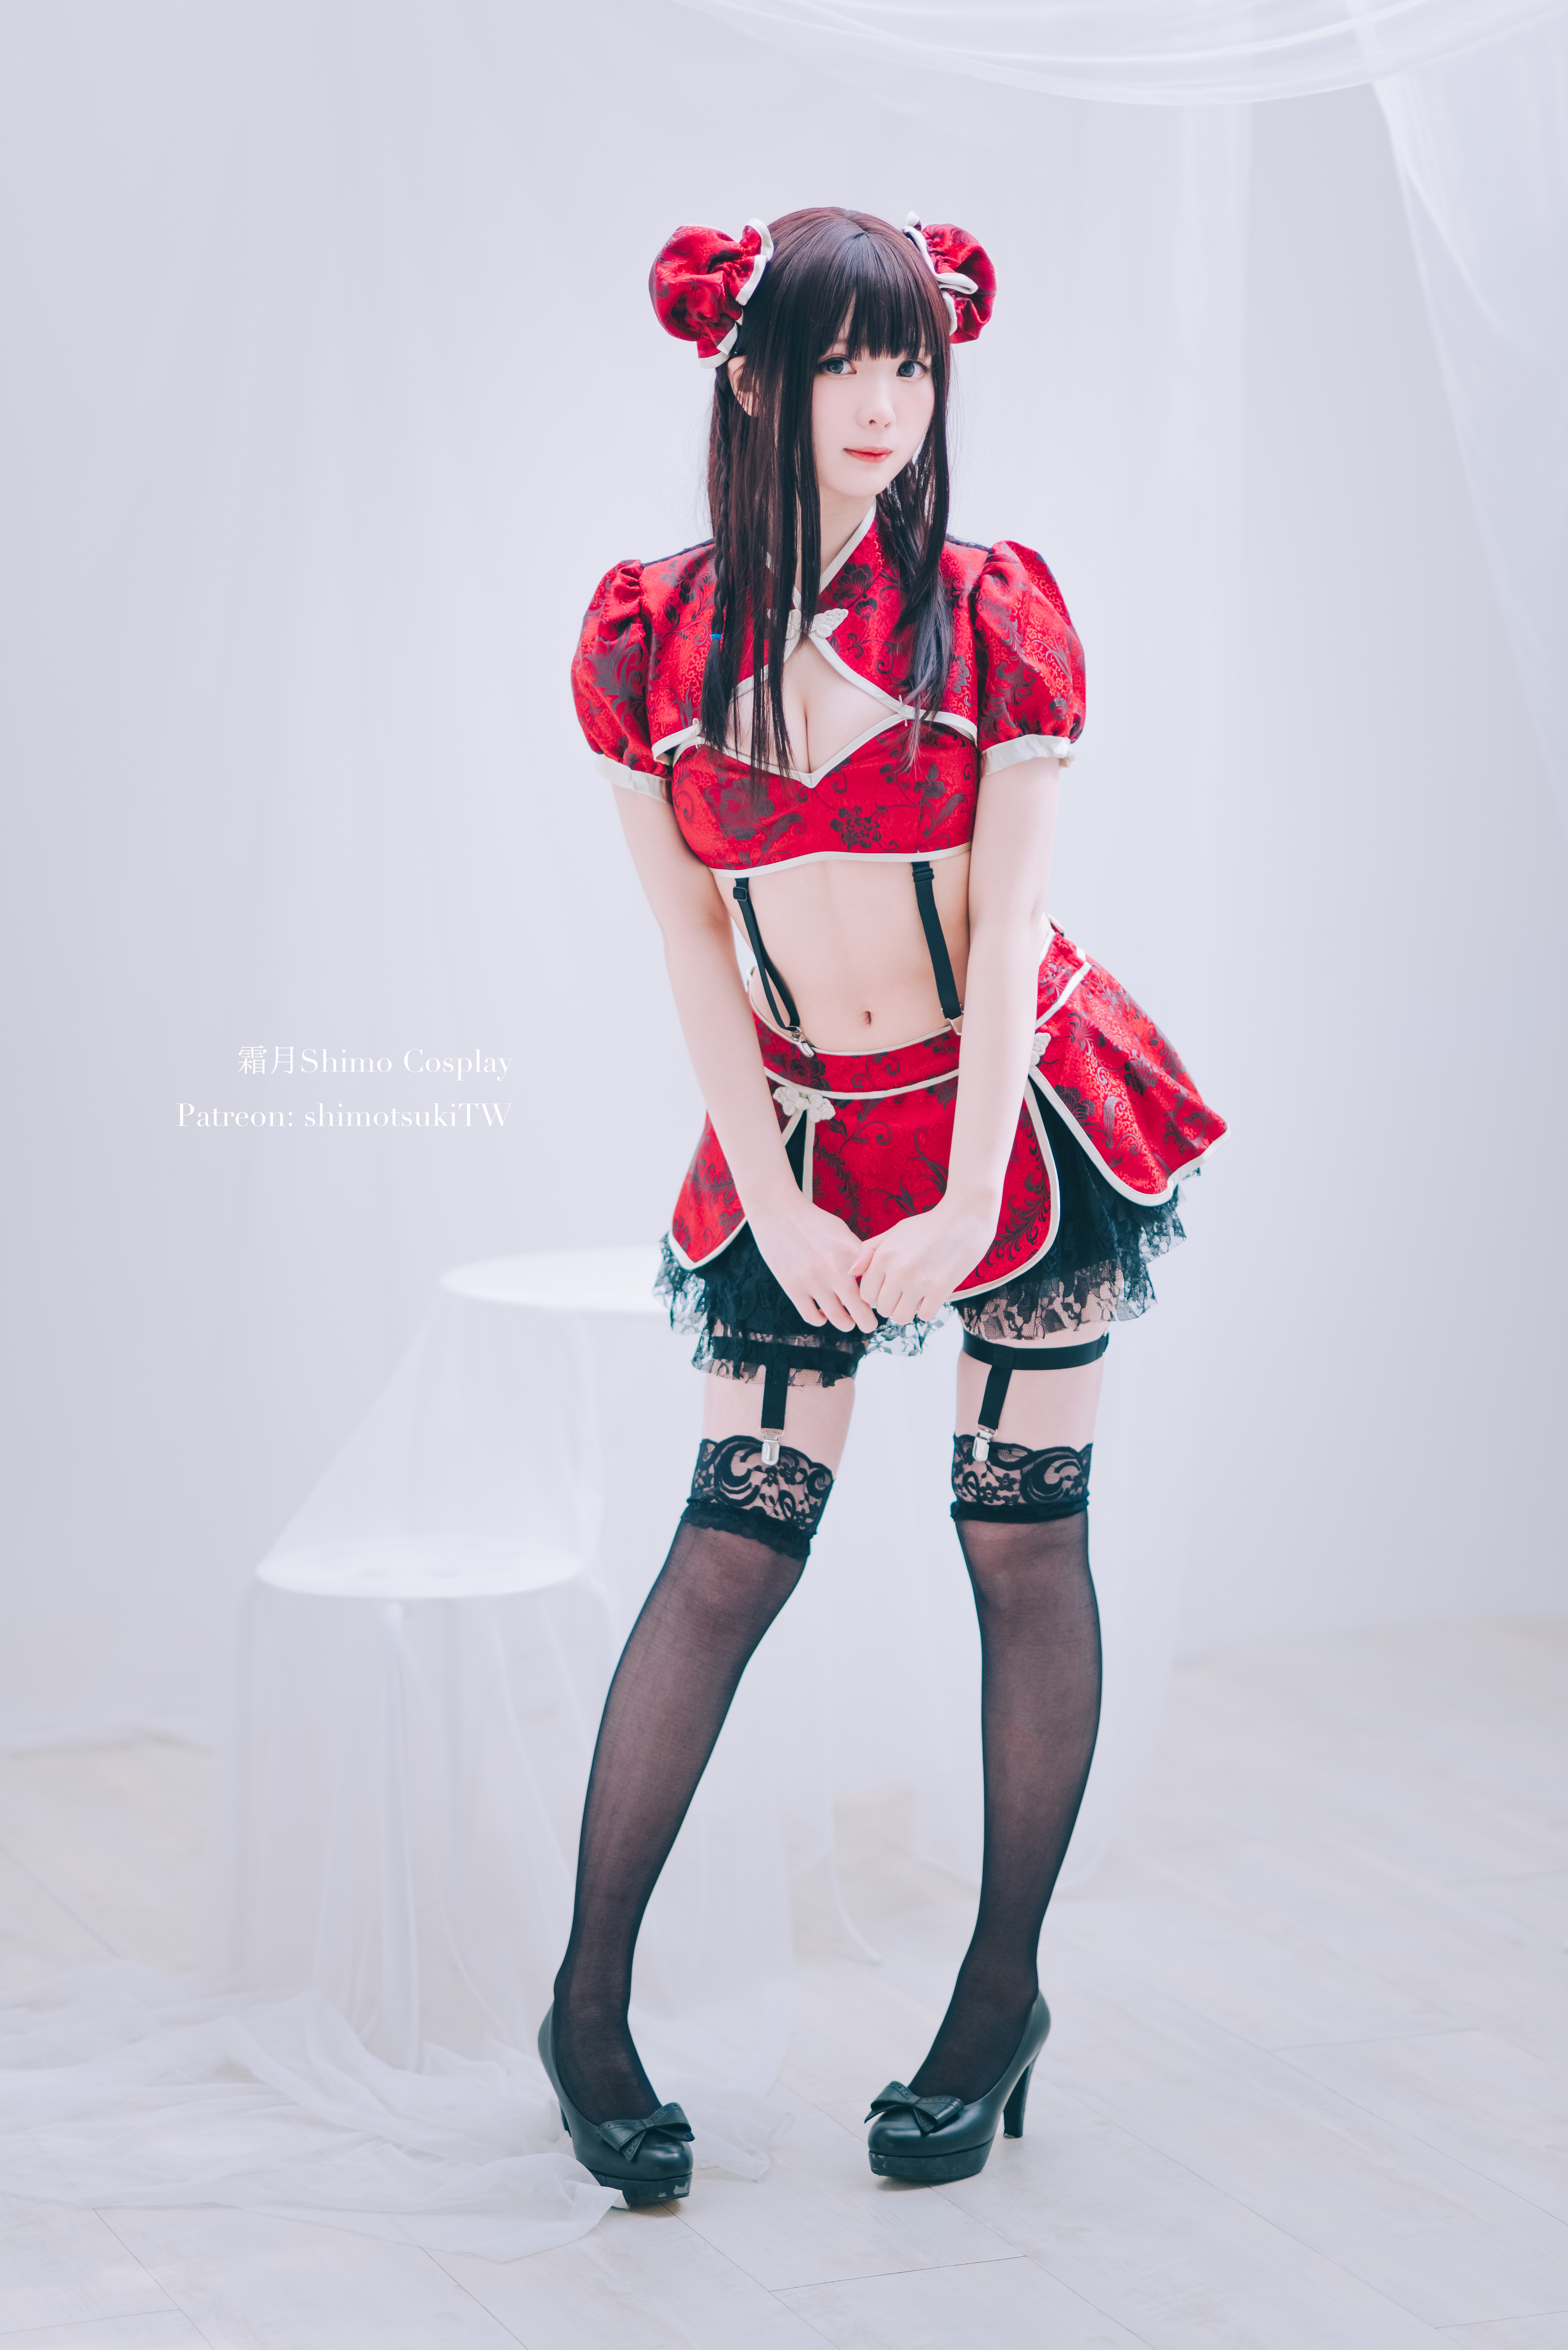 Women Model Asian Brunette Bangs Chinese Cheongsam Crop Top Suspenders High Heels Looking At Viewer  4912x7360